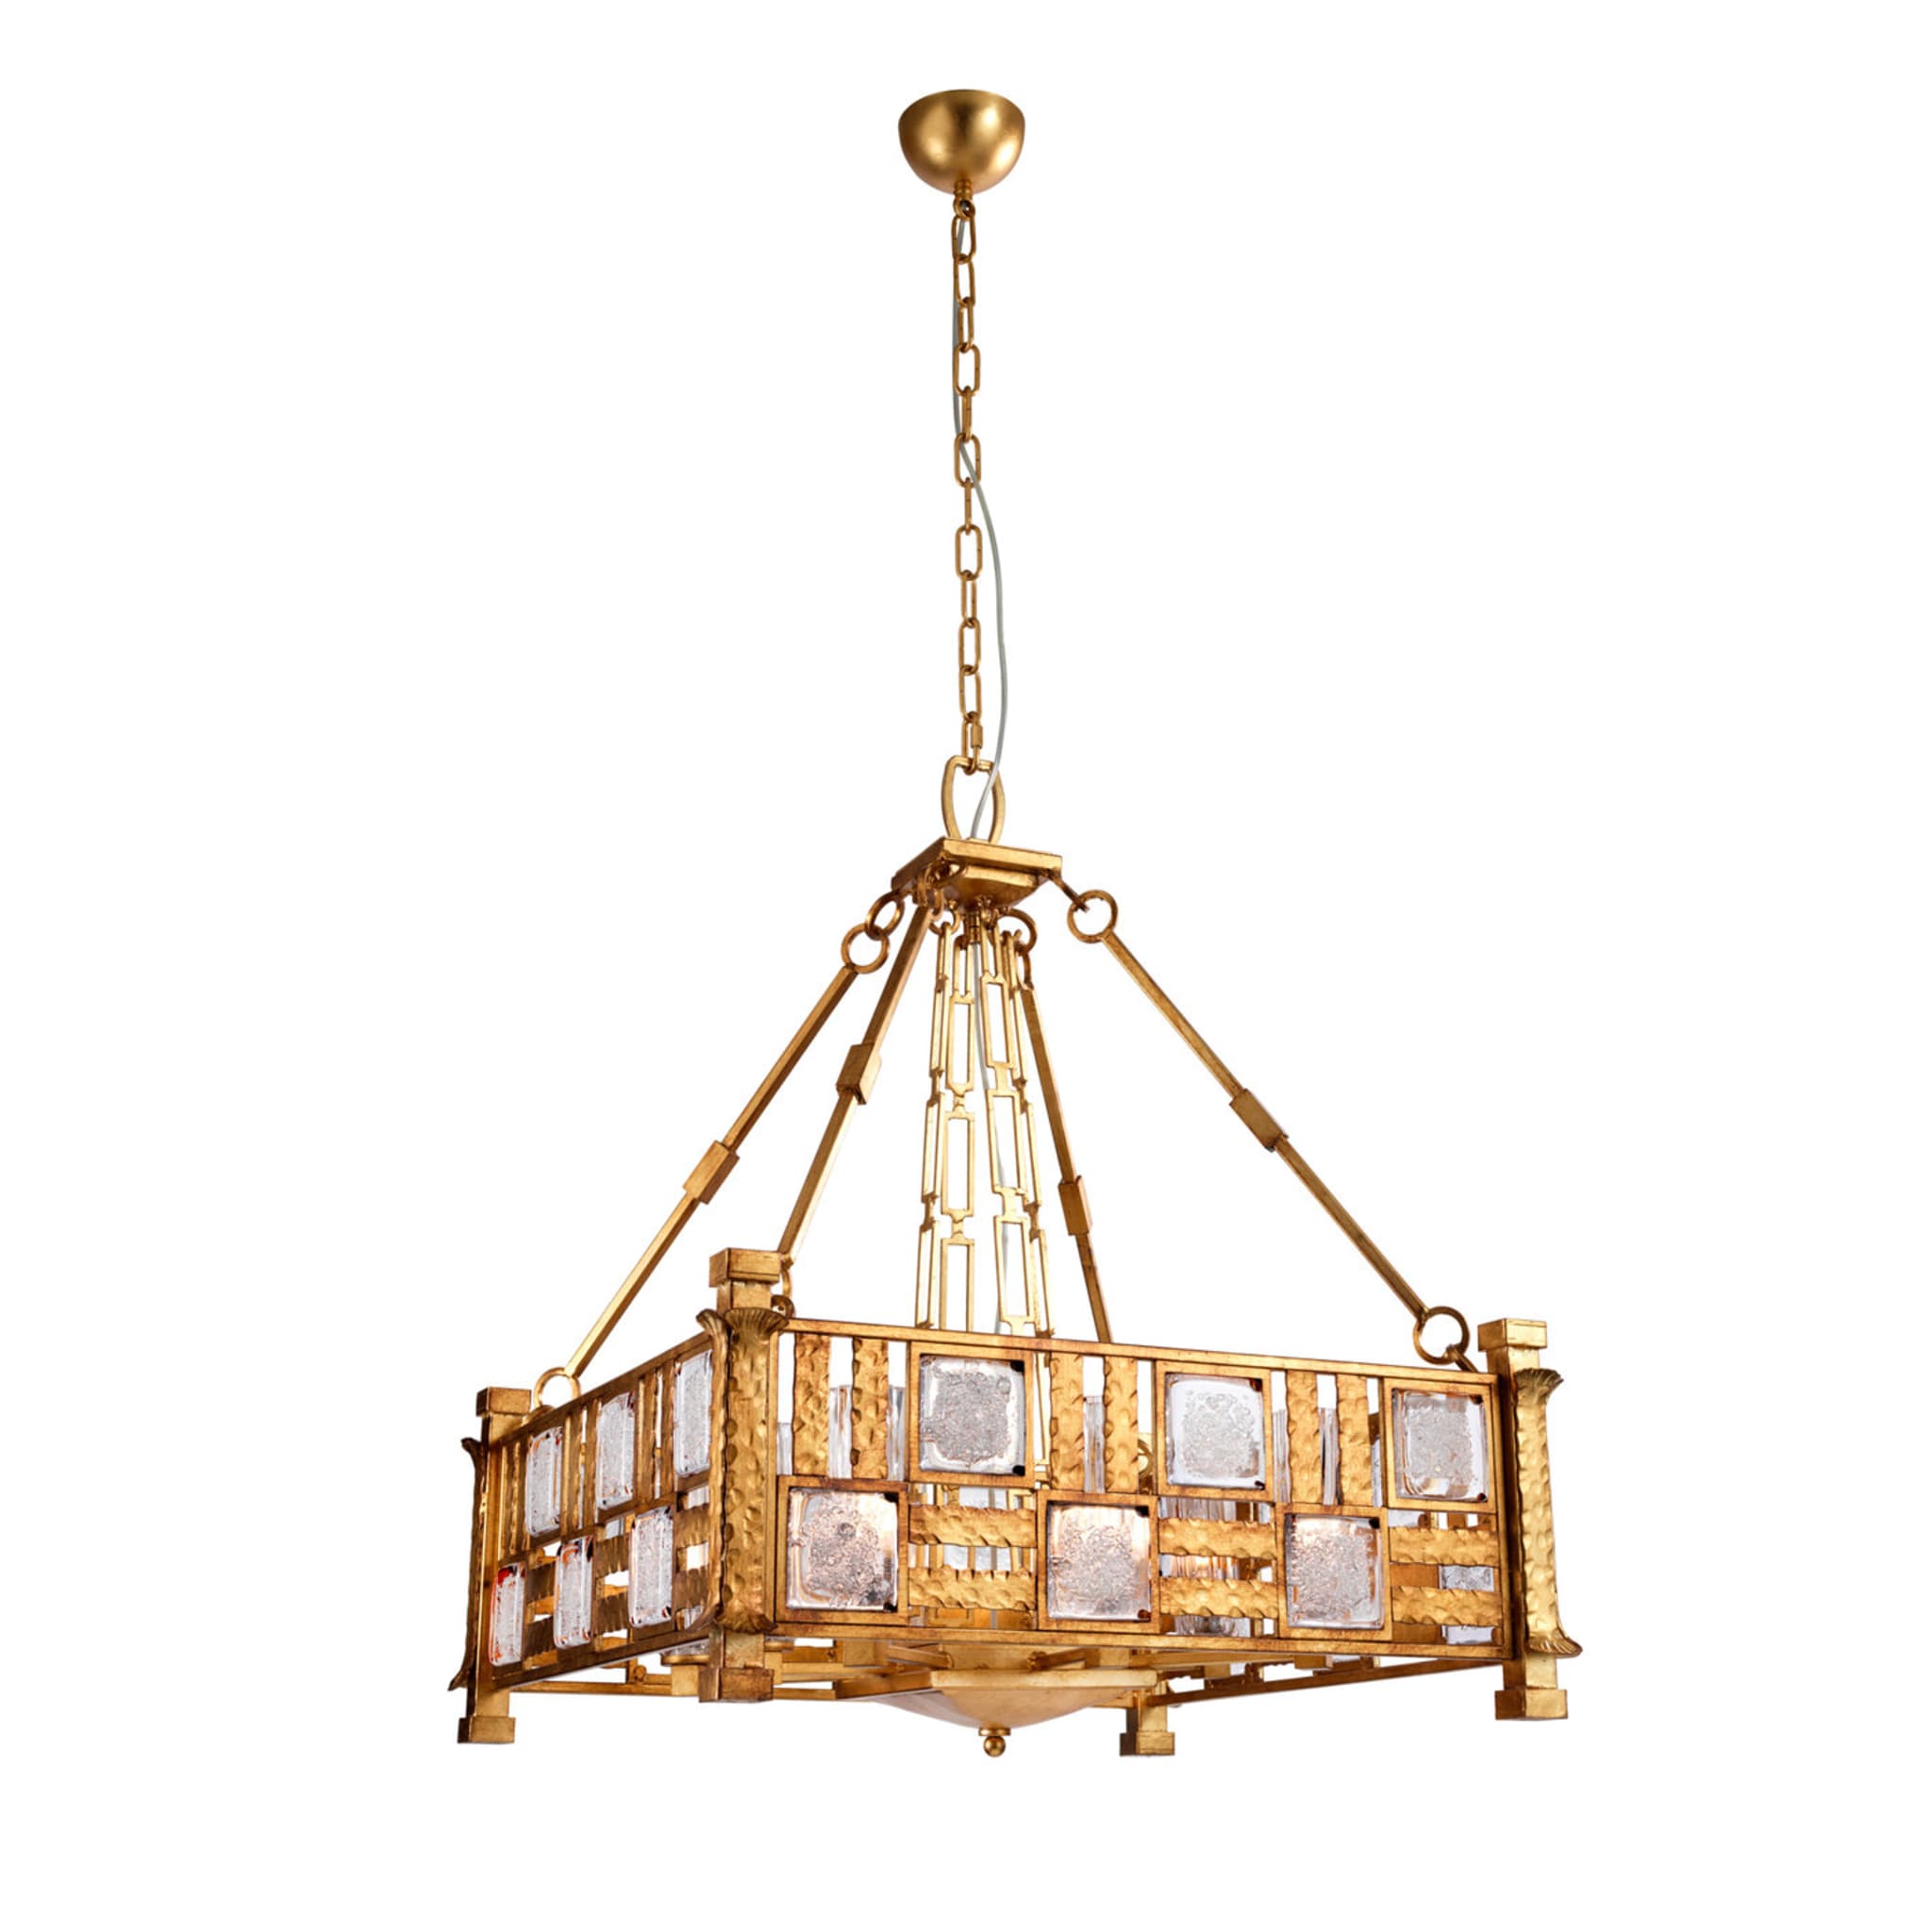 Decorative Pendant Lamp #1 - Main view